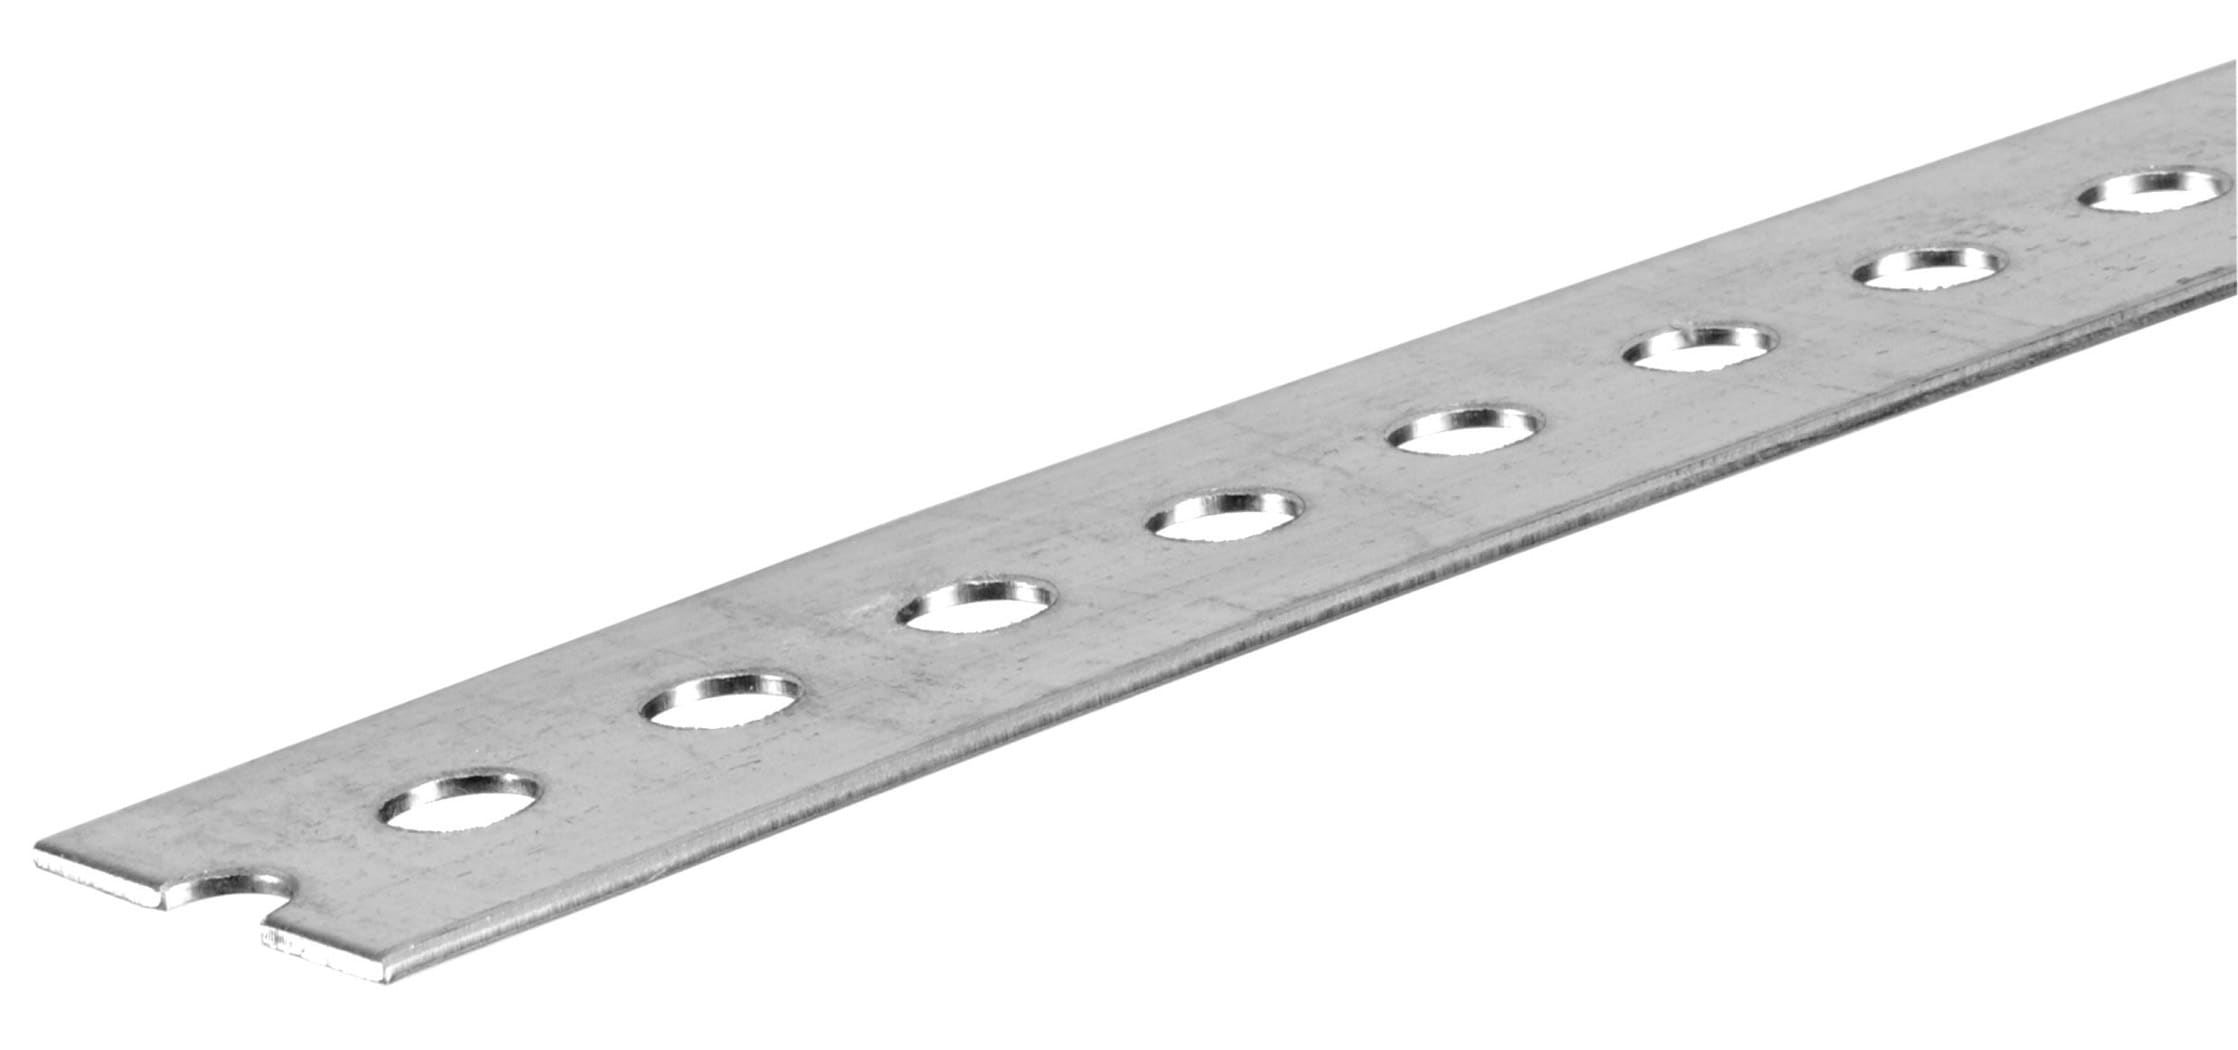 Hot Rolled Steel Flat Bar 3/8" x 4" x 36" 